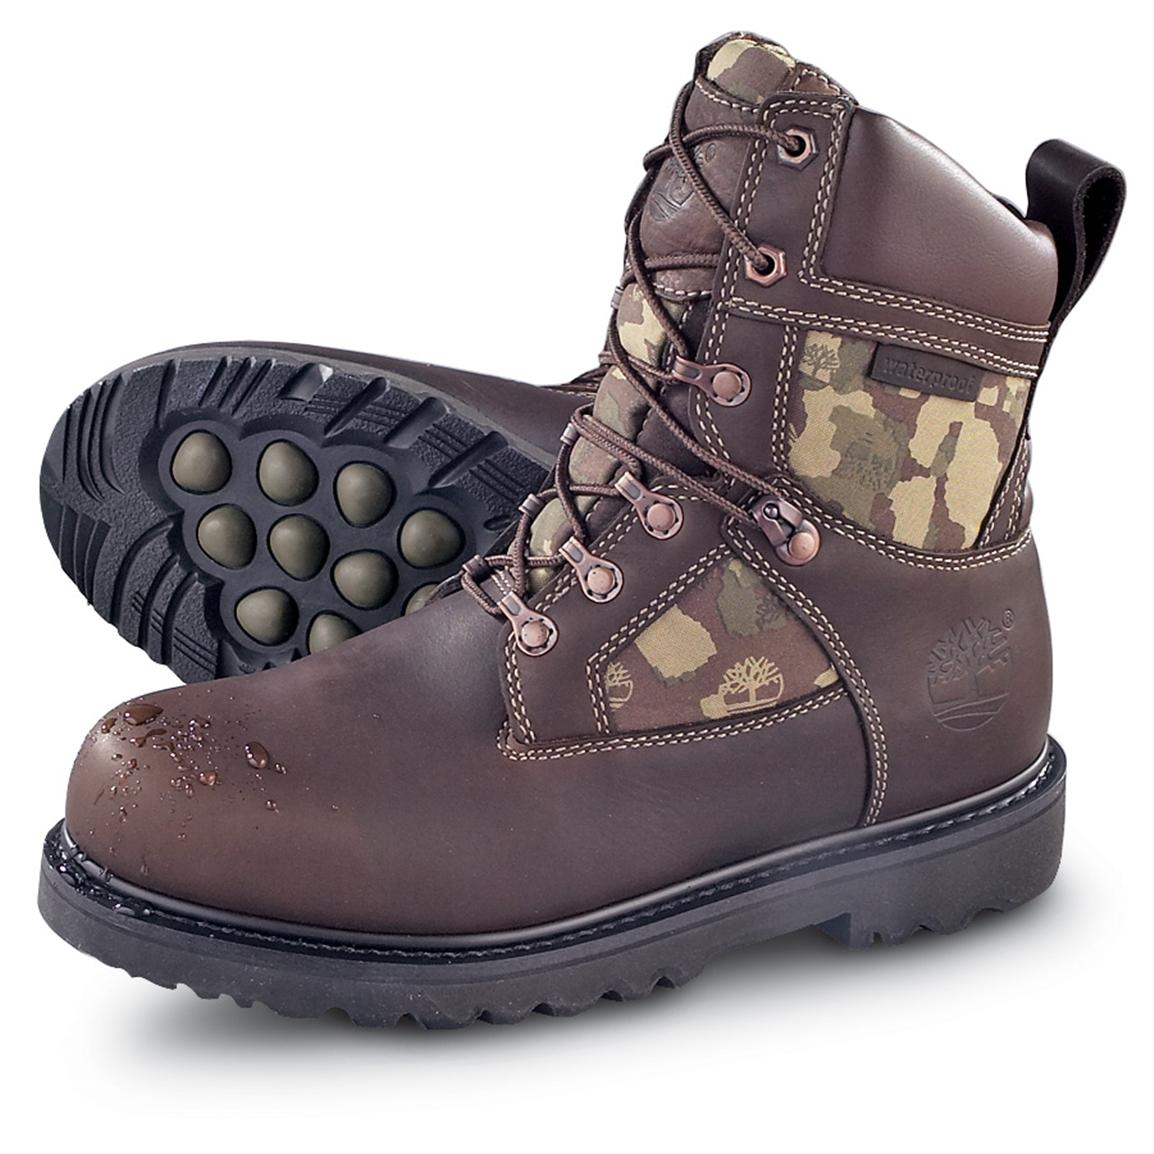 Men's Timberland® Waterproof Camo Boots, Brown / Camo - 101747, Hunting ...